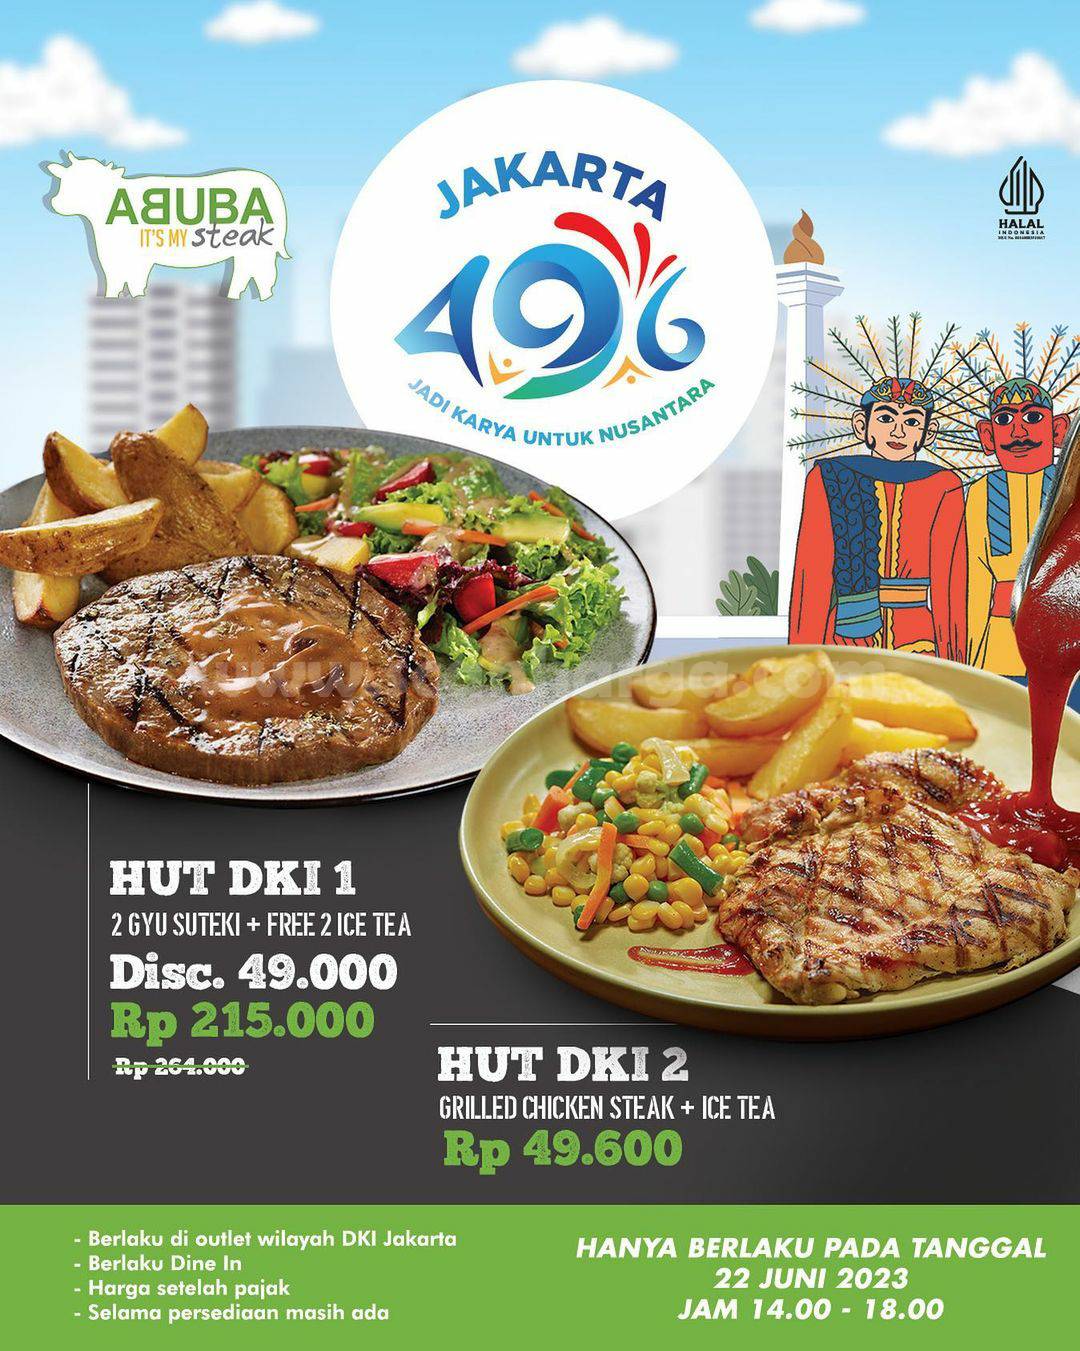 Promo ABUBA STEAK HUT JAKARTA 496 - Paket HUT DKI Mulai 49.6RB